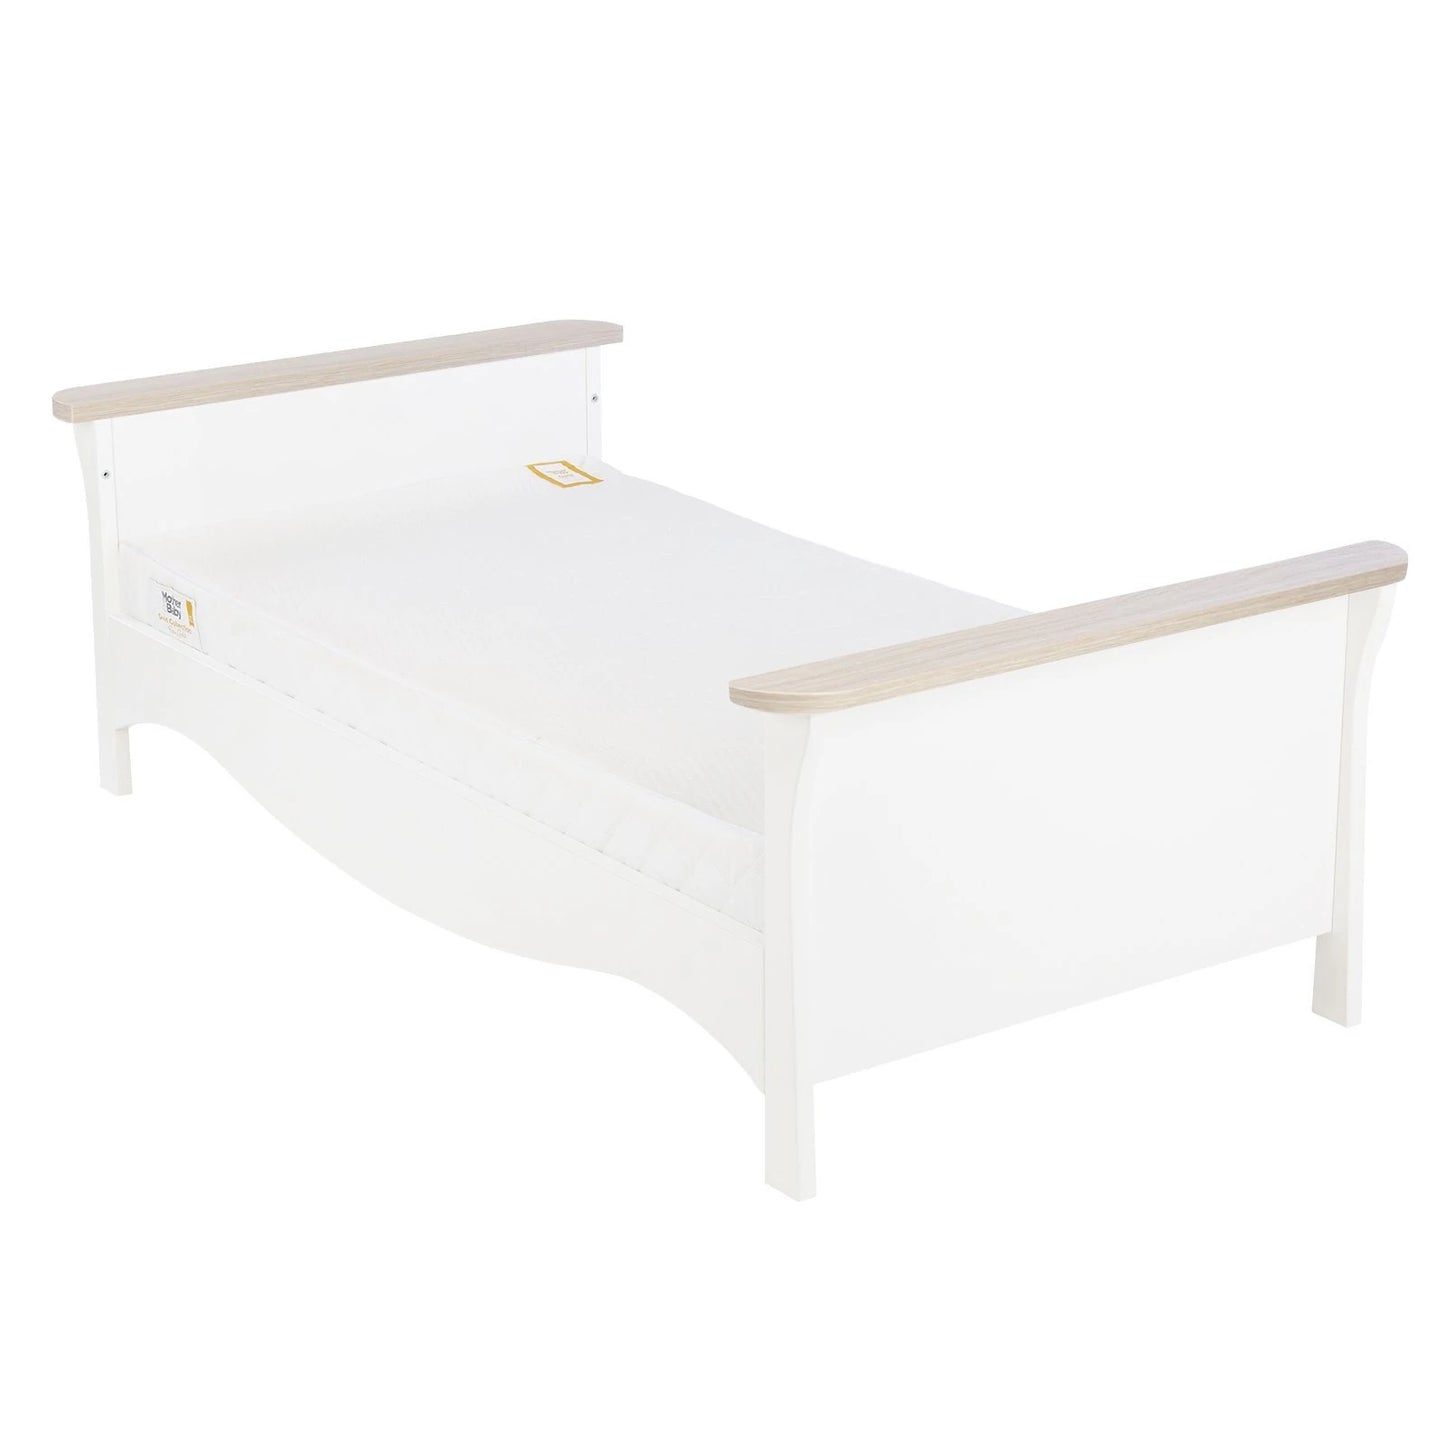 Cuddle Co Clara 2 Piece Nursery Furniture Set (Cot Bed & Dresser) - White & Ash